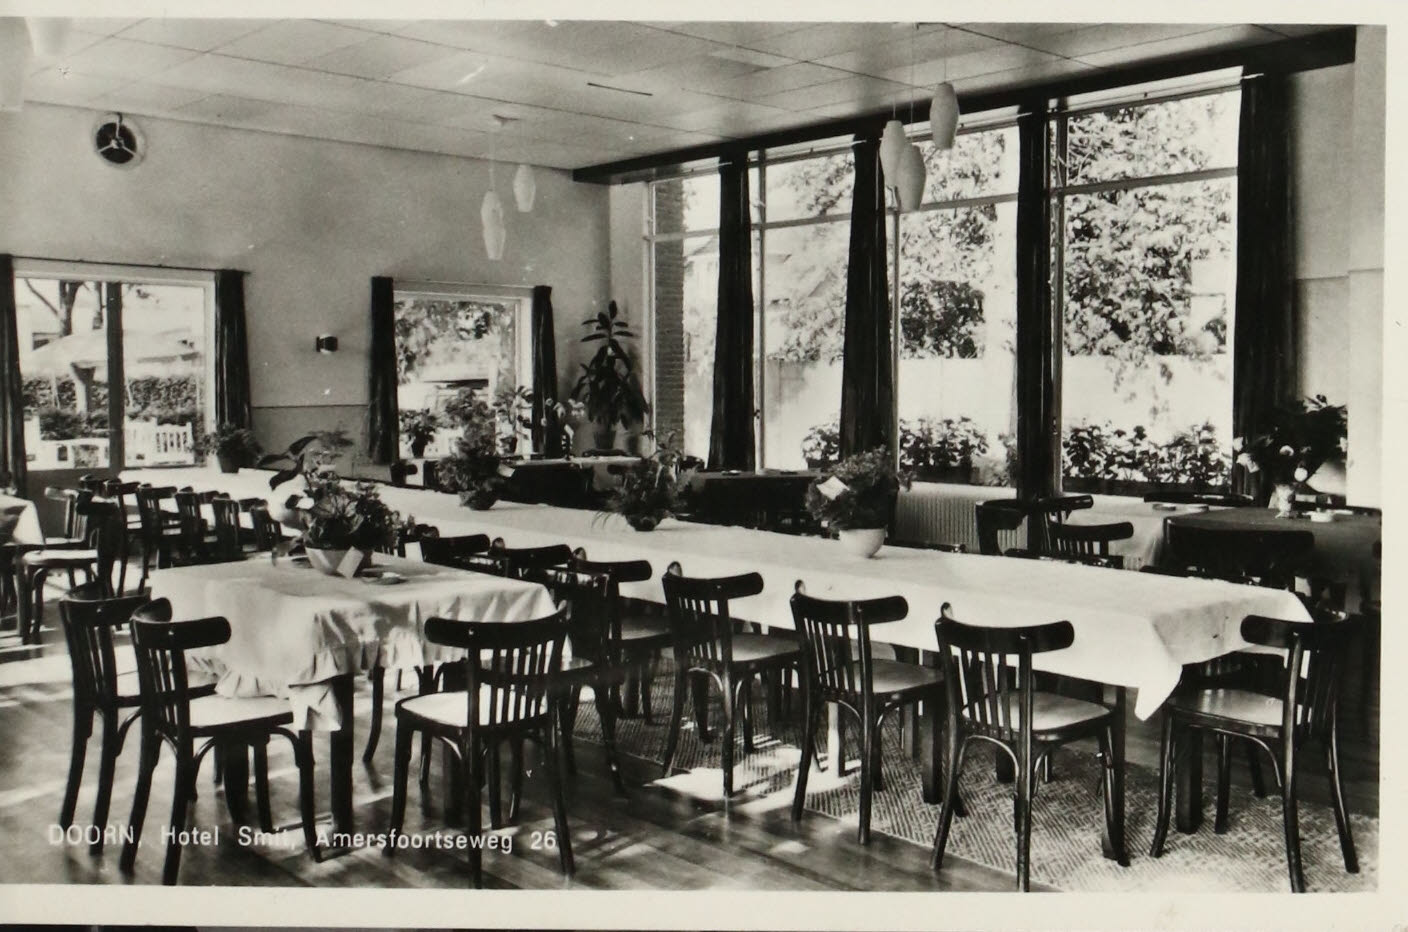 Interieur Hotel Smit in Doorn, archieftoegang 203 (THA), cat.nr. 10043